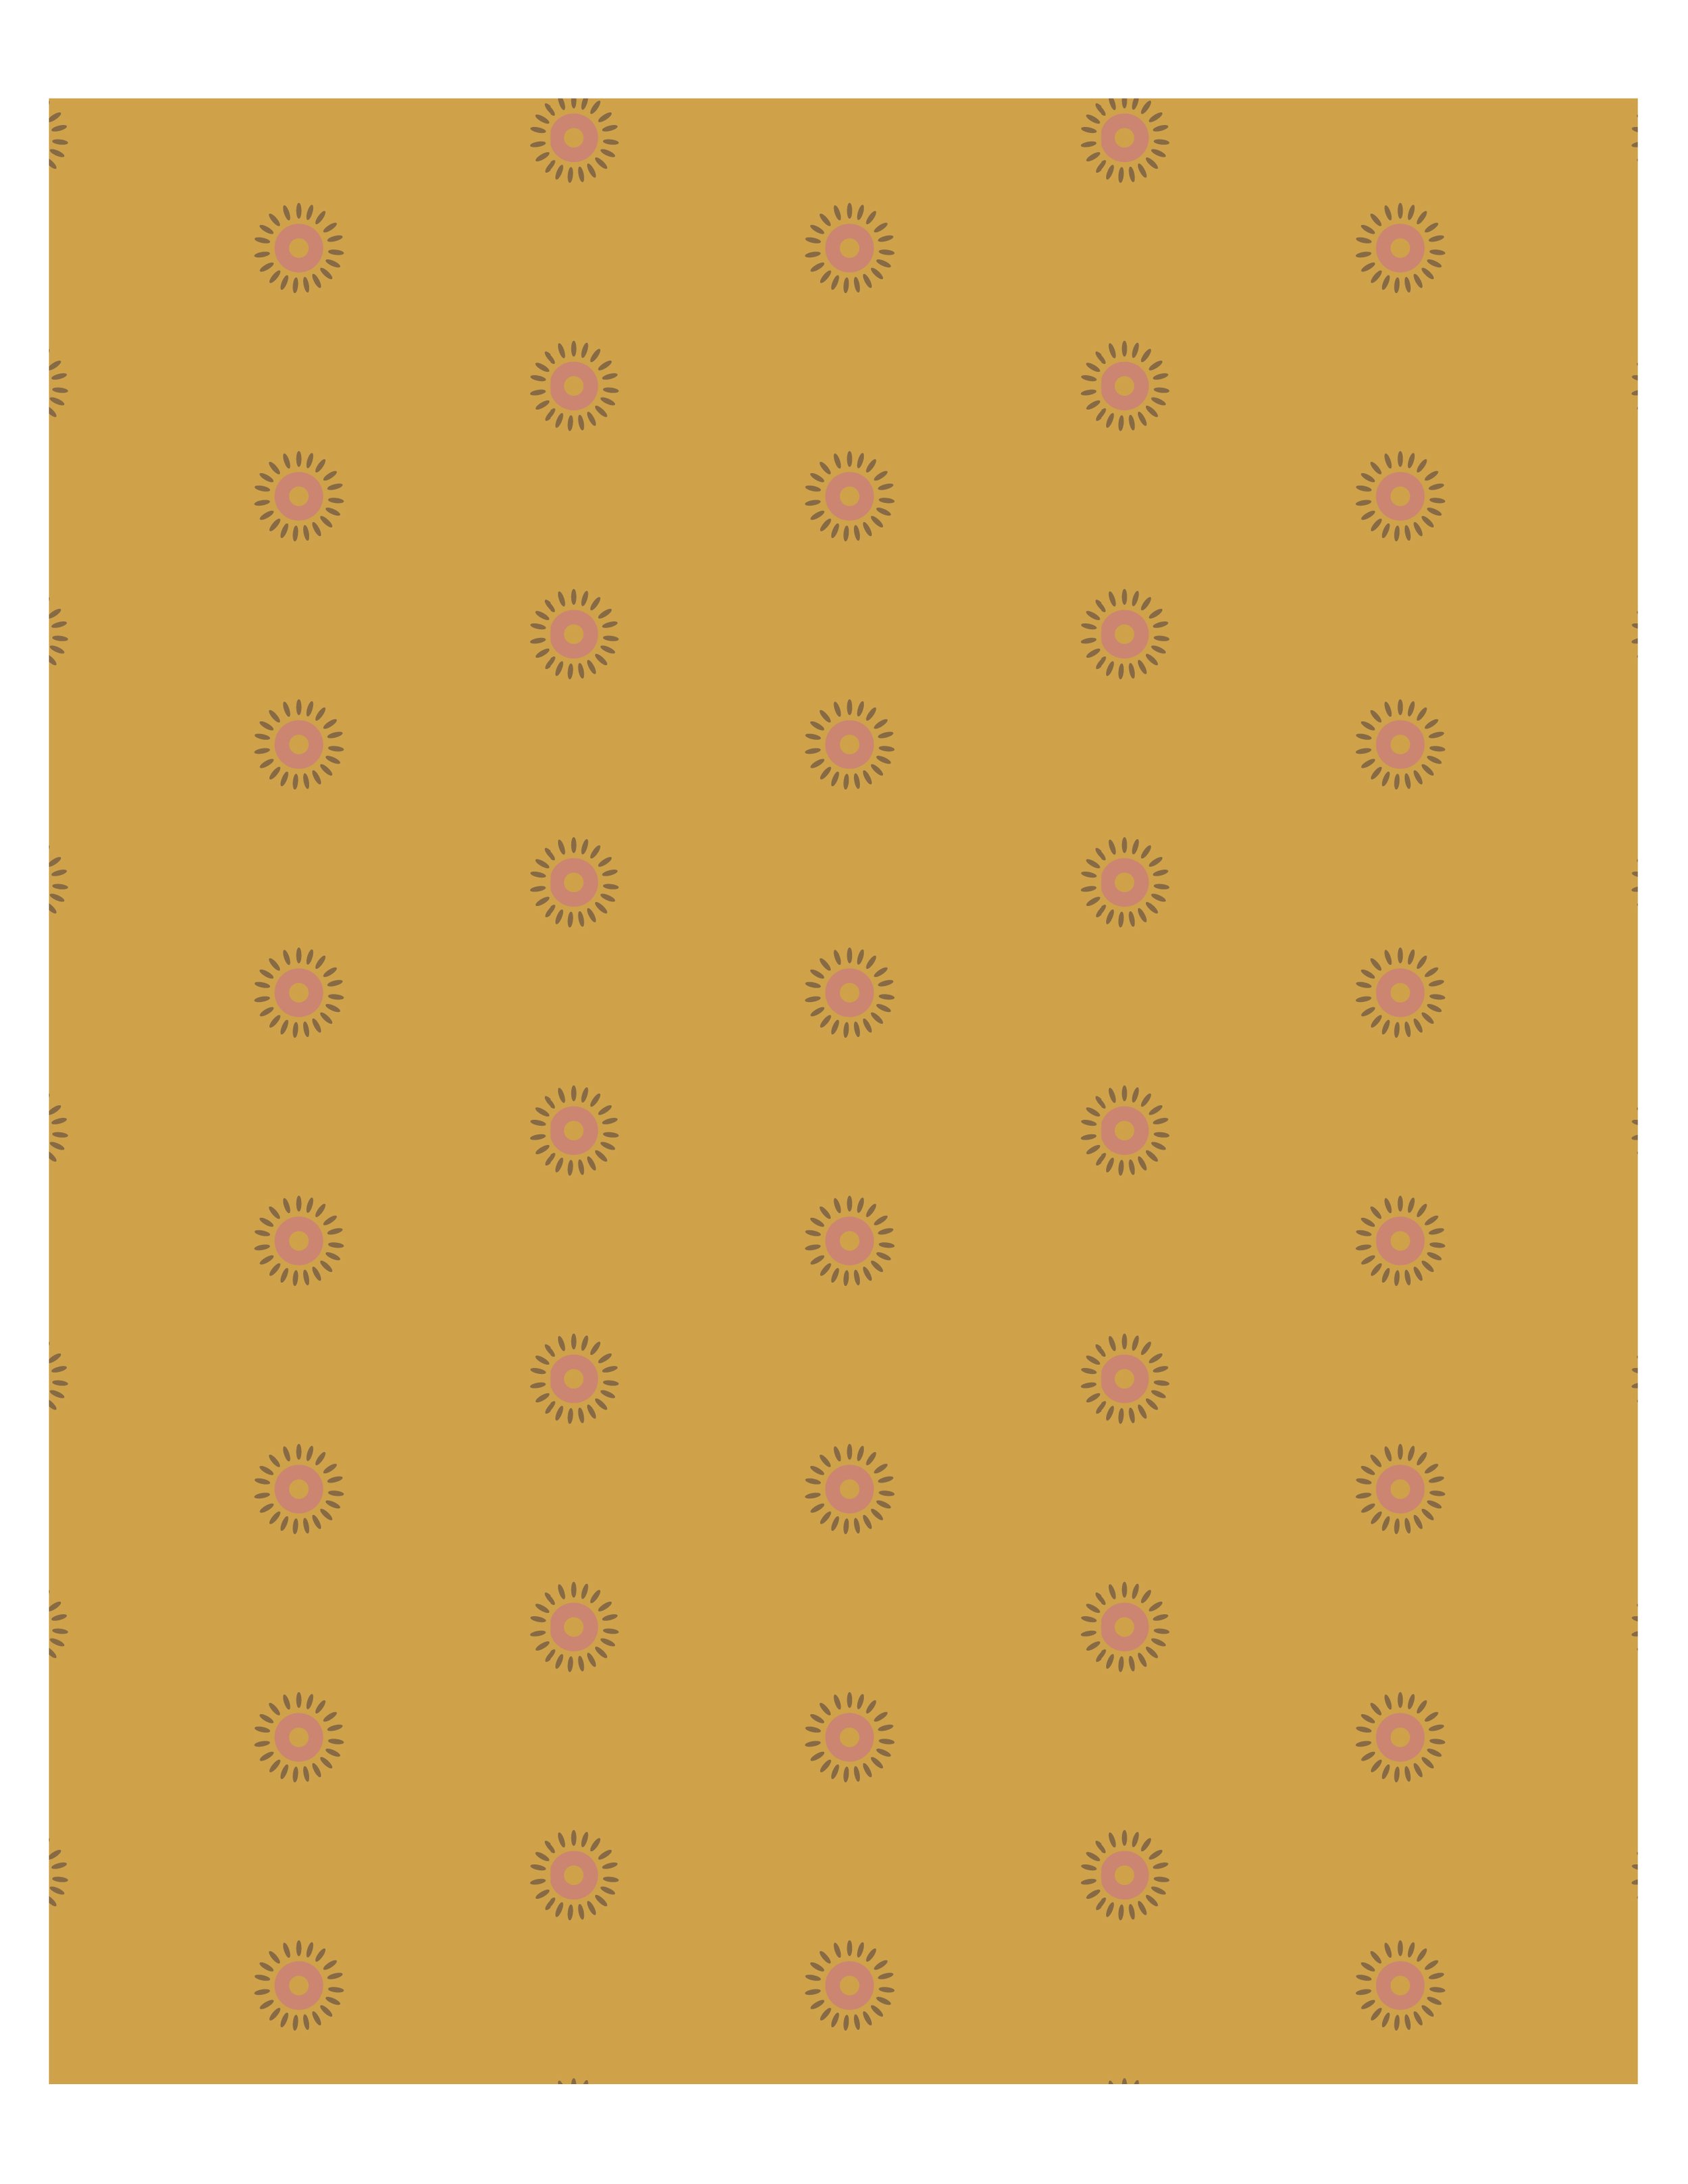 Round Floret on Yellow Pattern Print-01.jpg